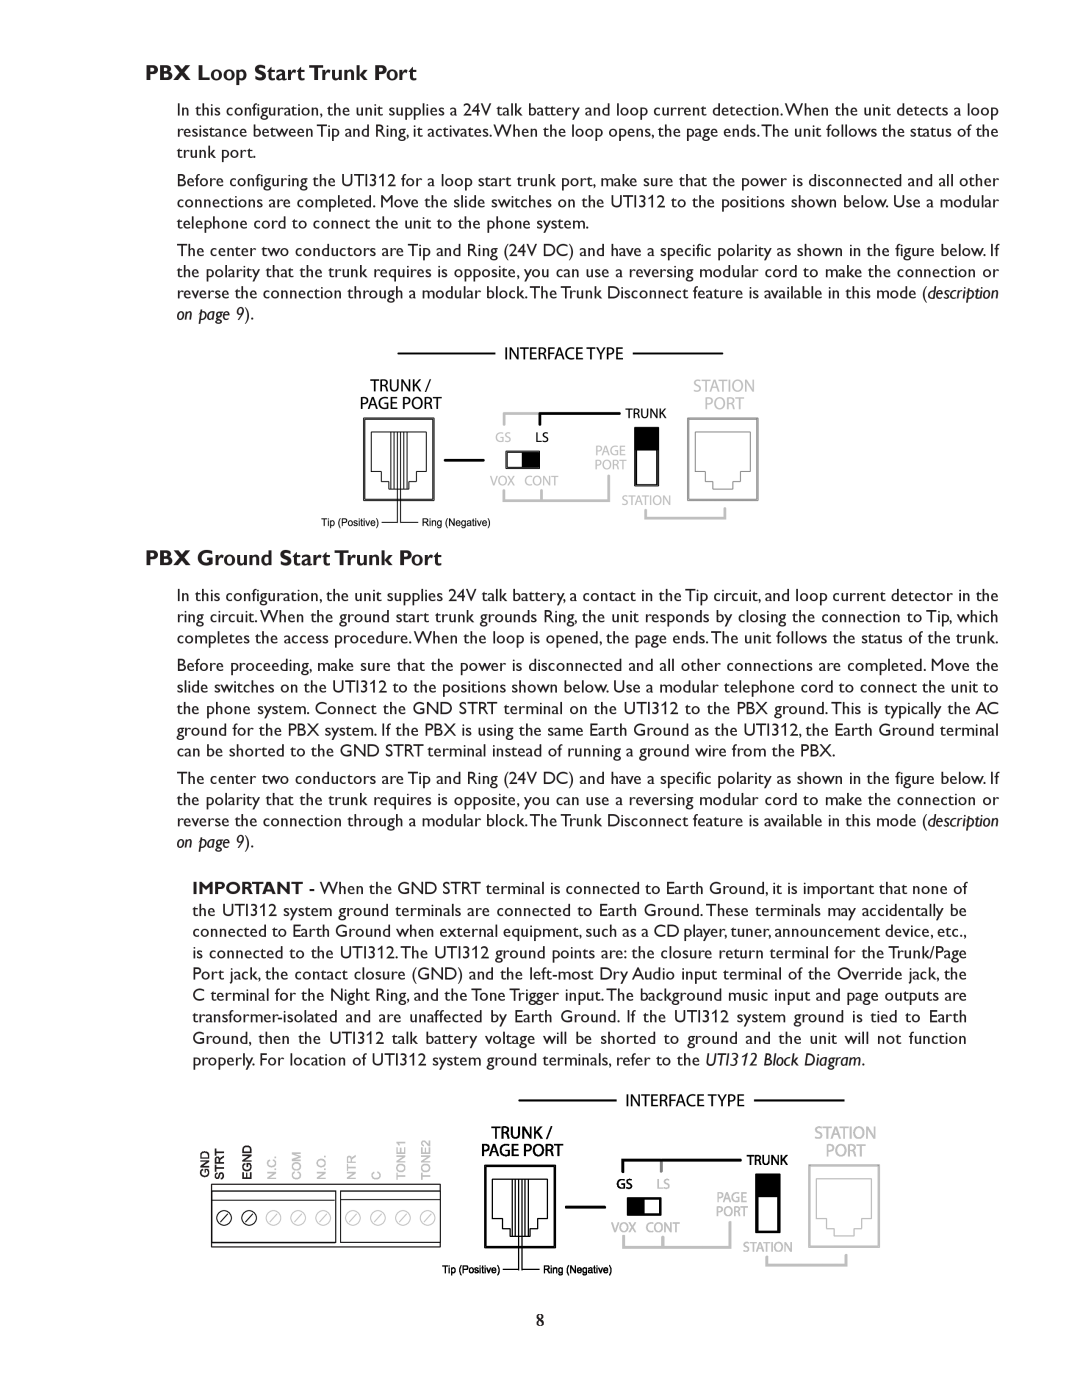 Bogen UTI312 specifications PBX Loop Start Trunk Port, PBX Ground Start Trunk Port 